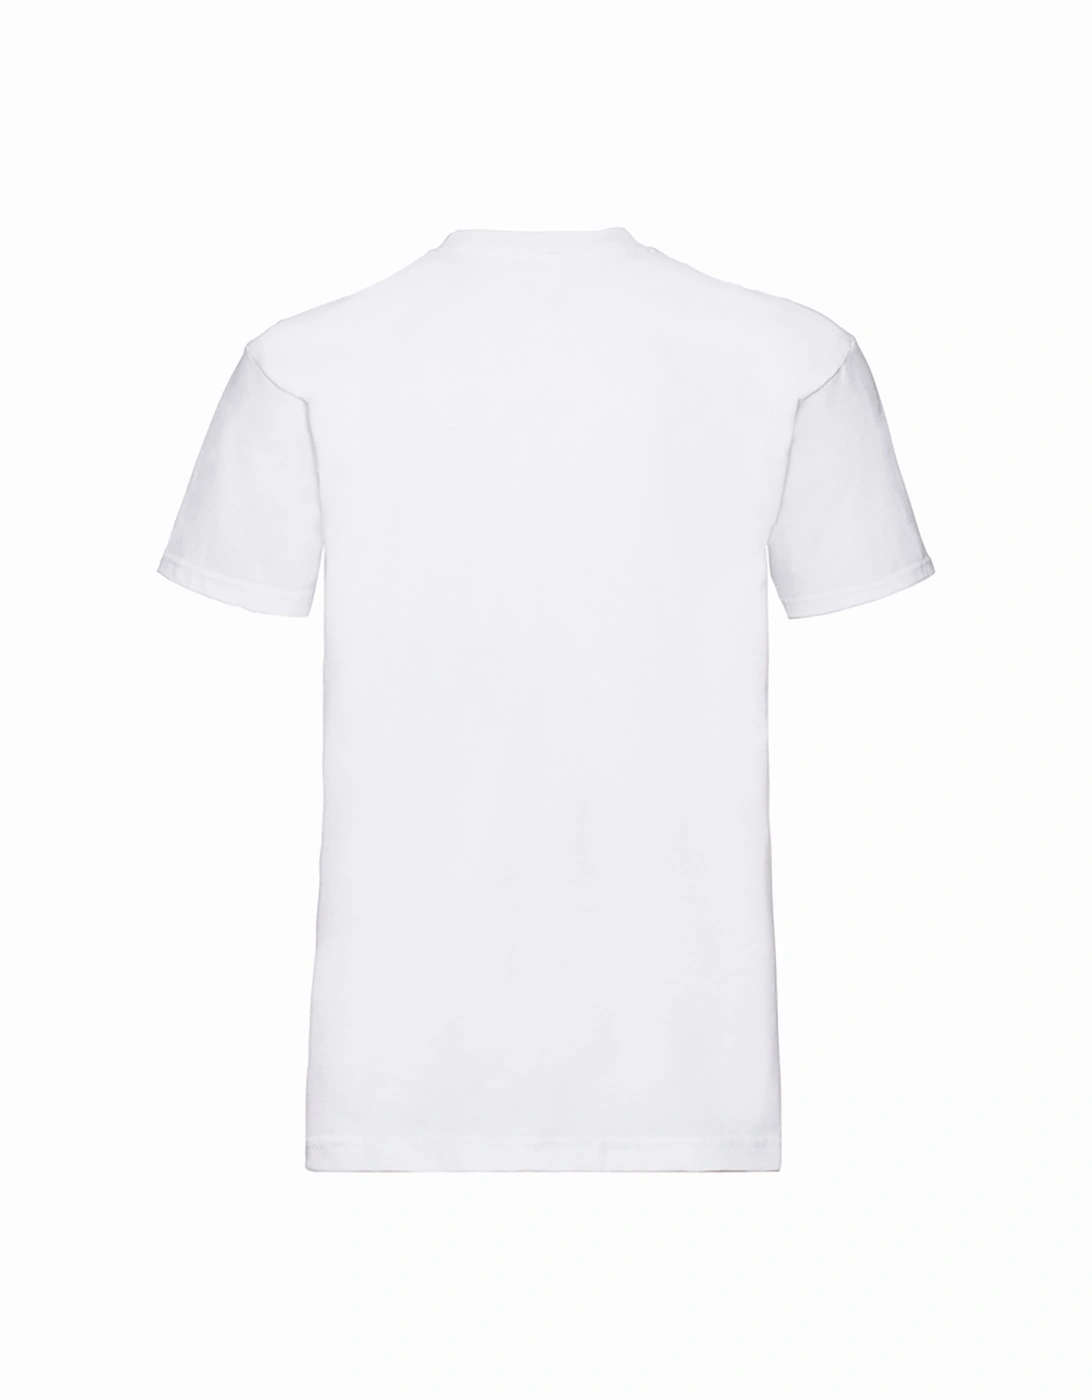 Mens Super Premium Short Sleeve Crew Neck T-Shirt